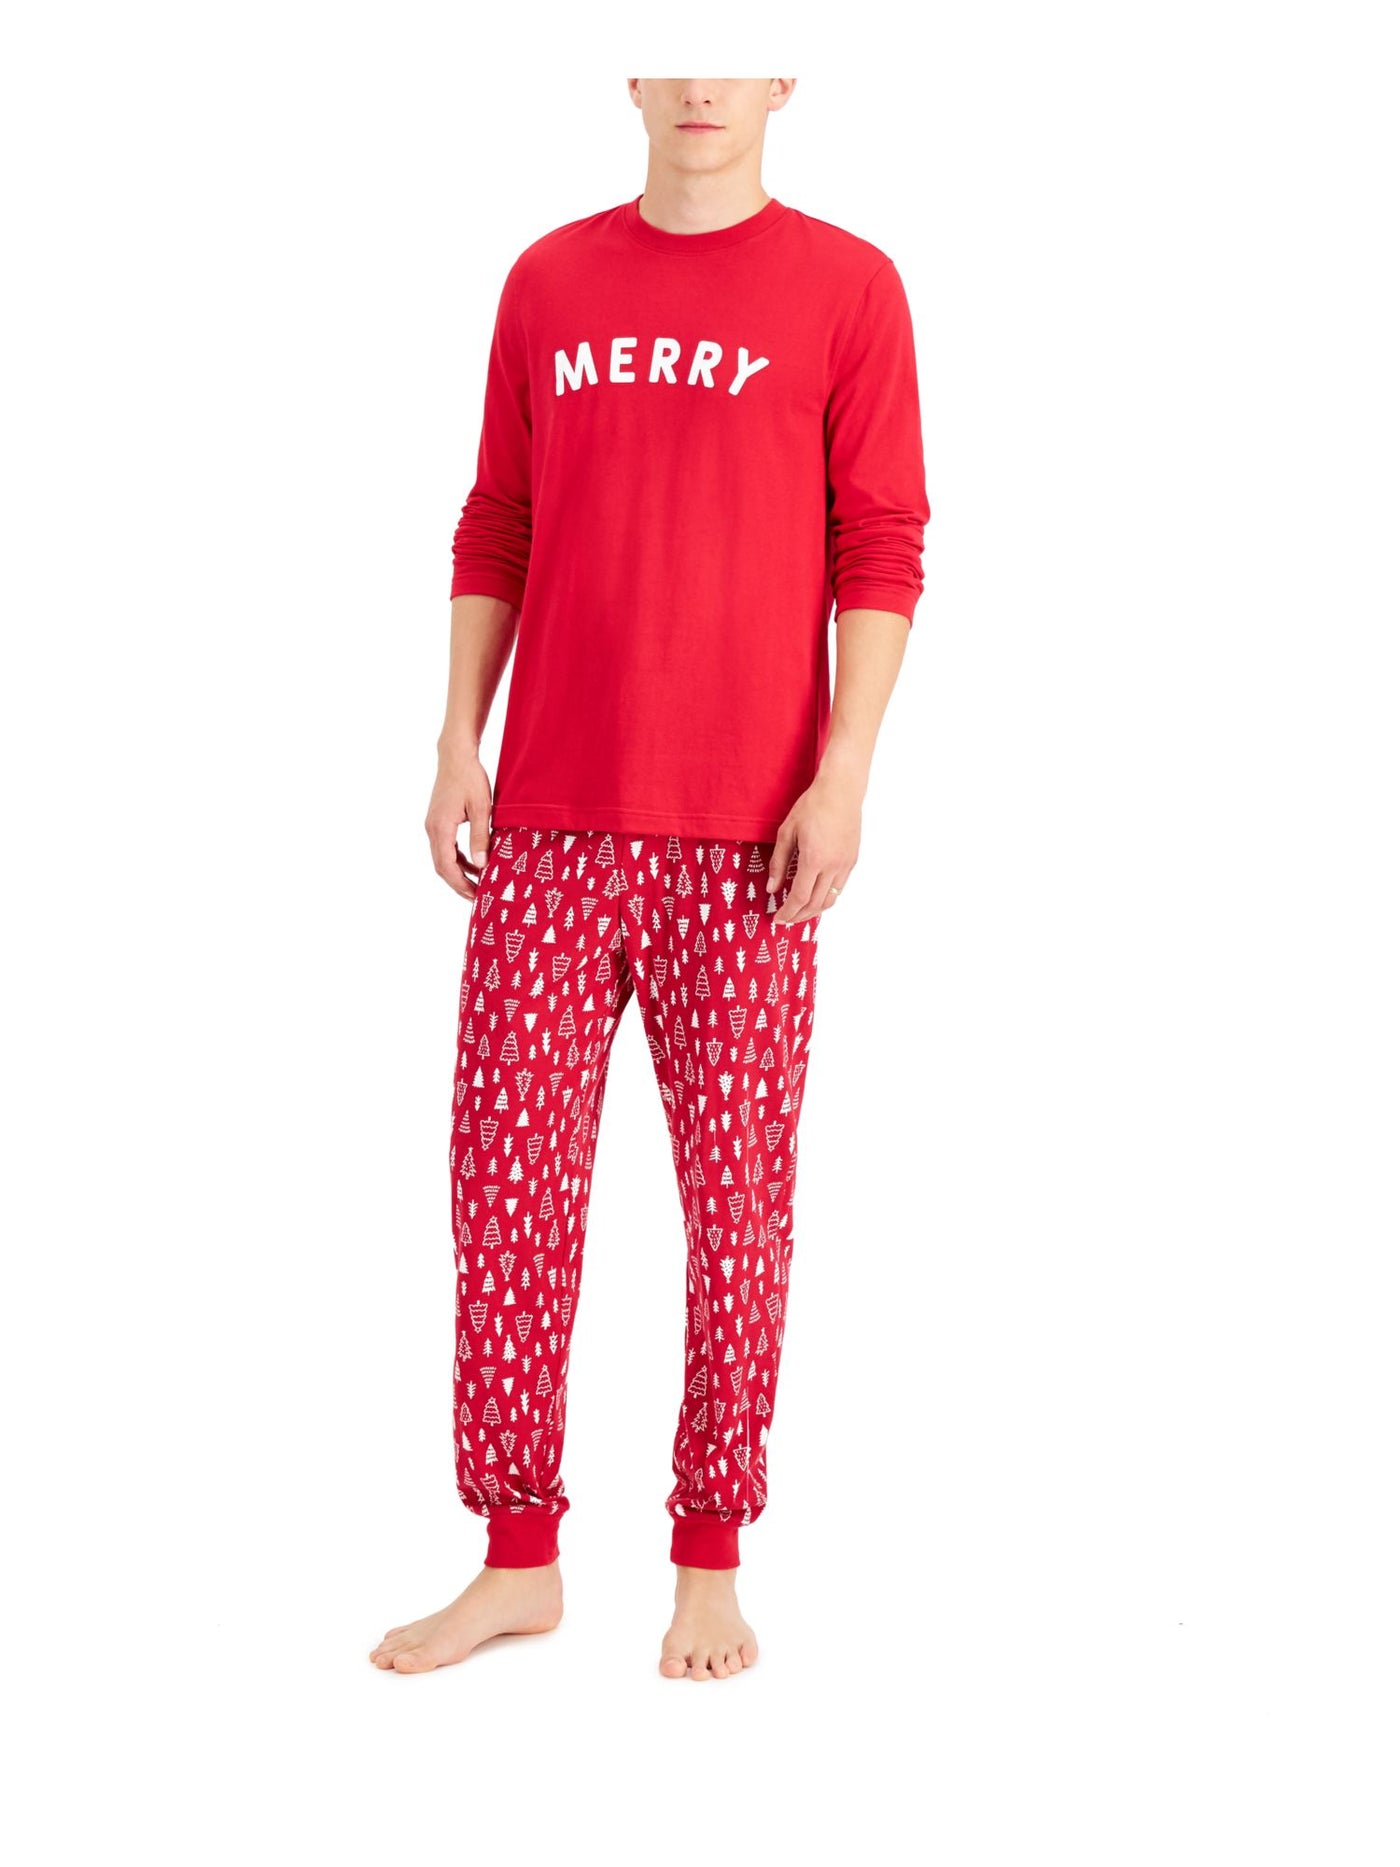 FAMILY PJs Mens Merry Red Printed Elastic Band Long Sleeve T-Shirt Top Cuffed Pants Pajamas XL